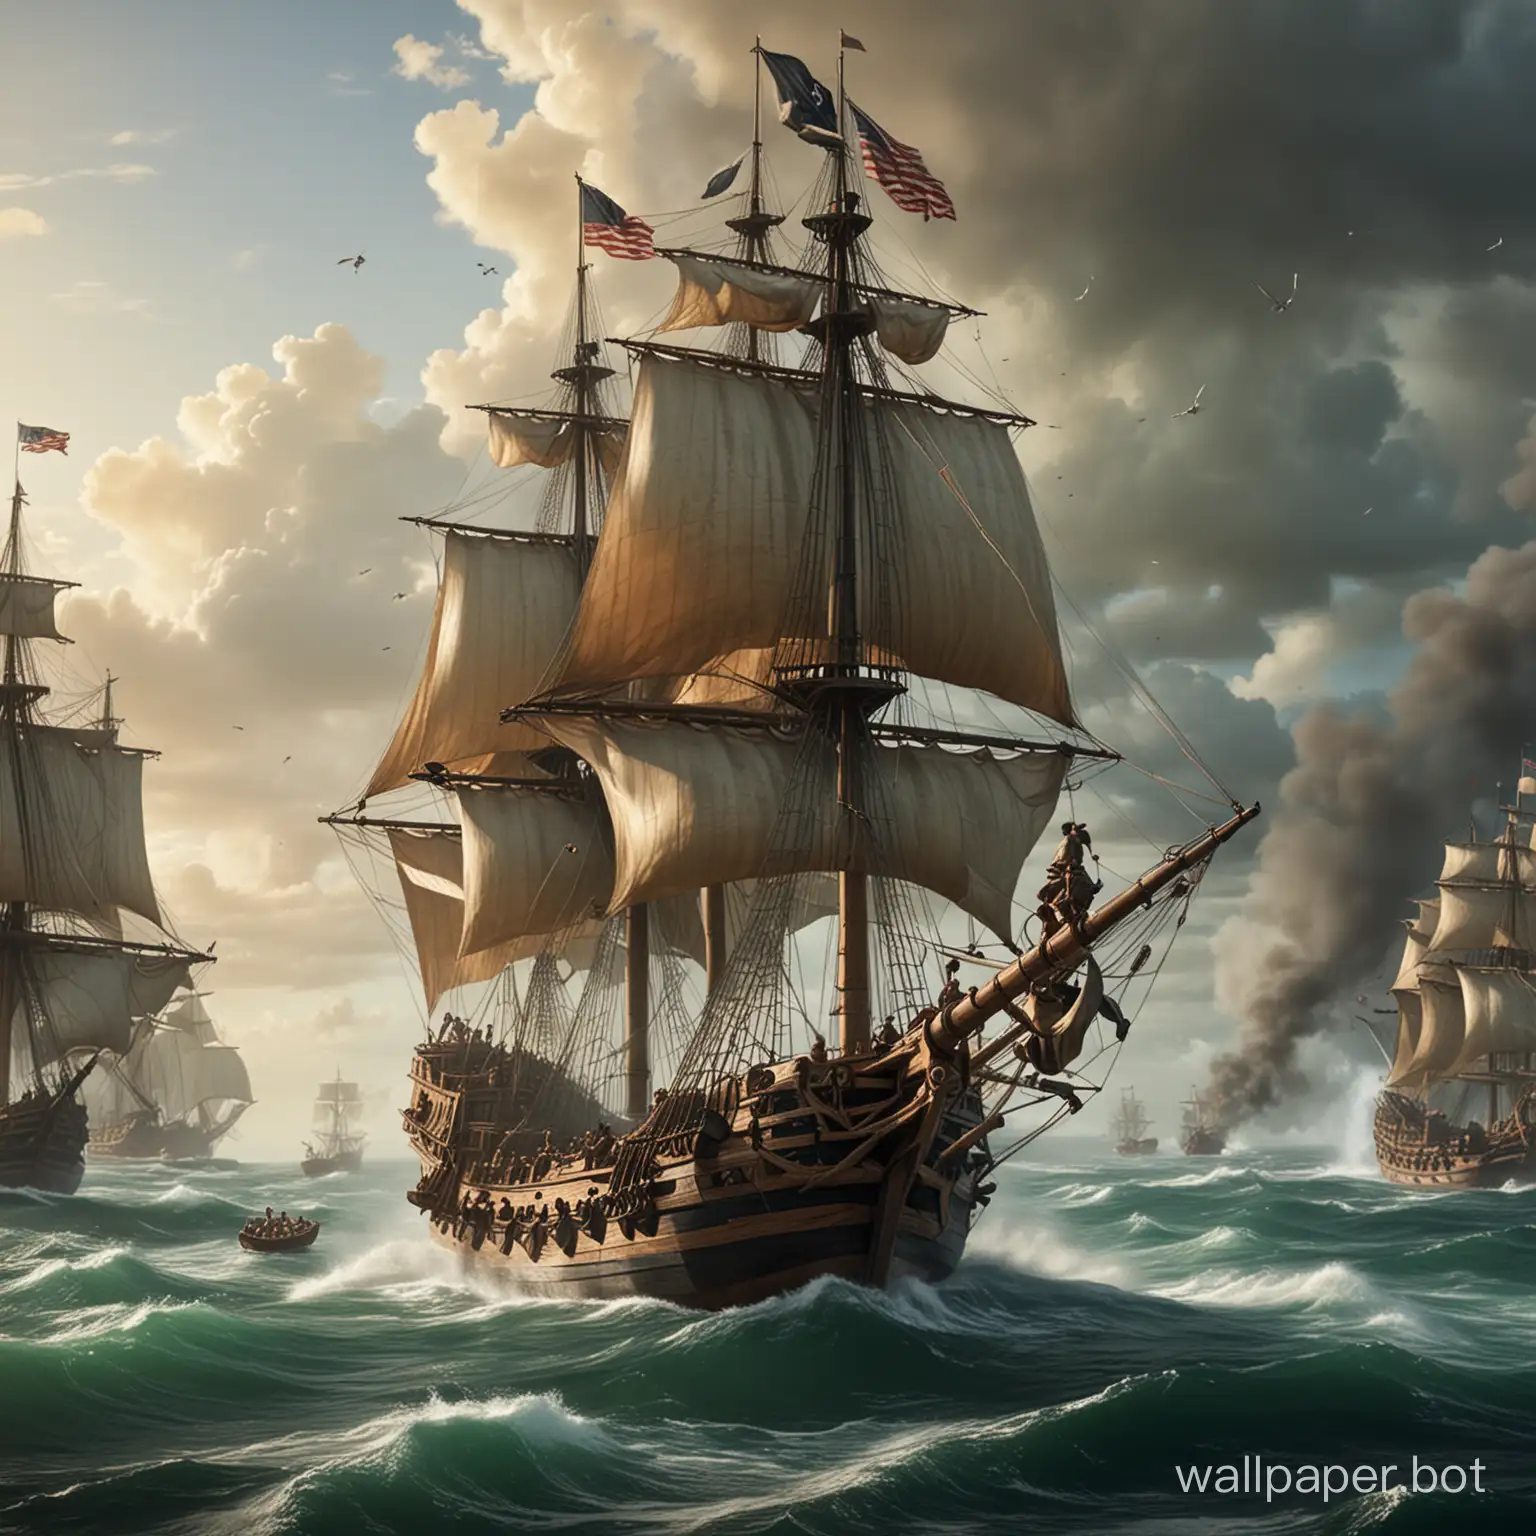 Historic-Galleon-Engaged-in-Intense-Naval-Battle-near-Island